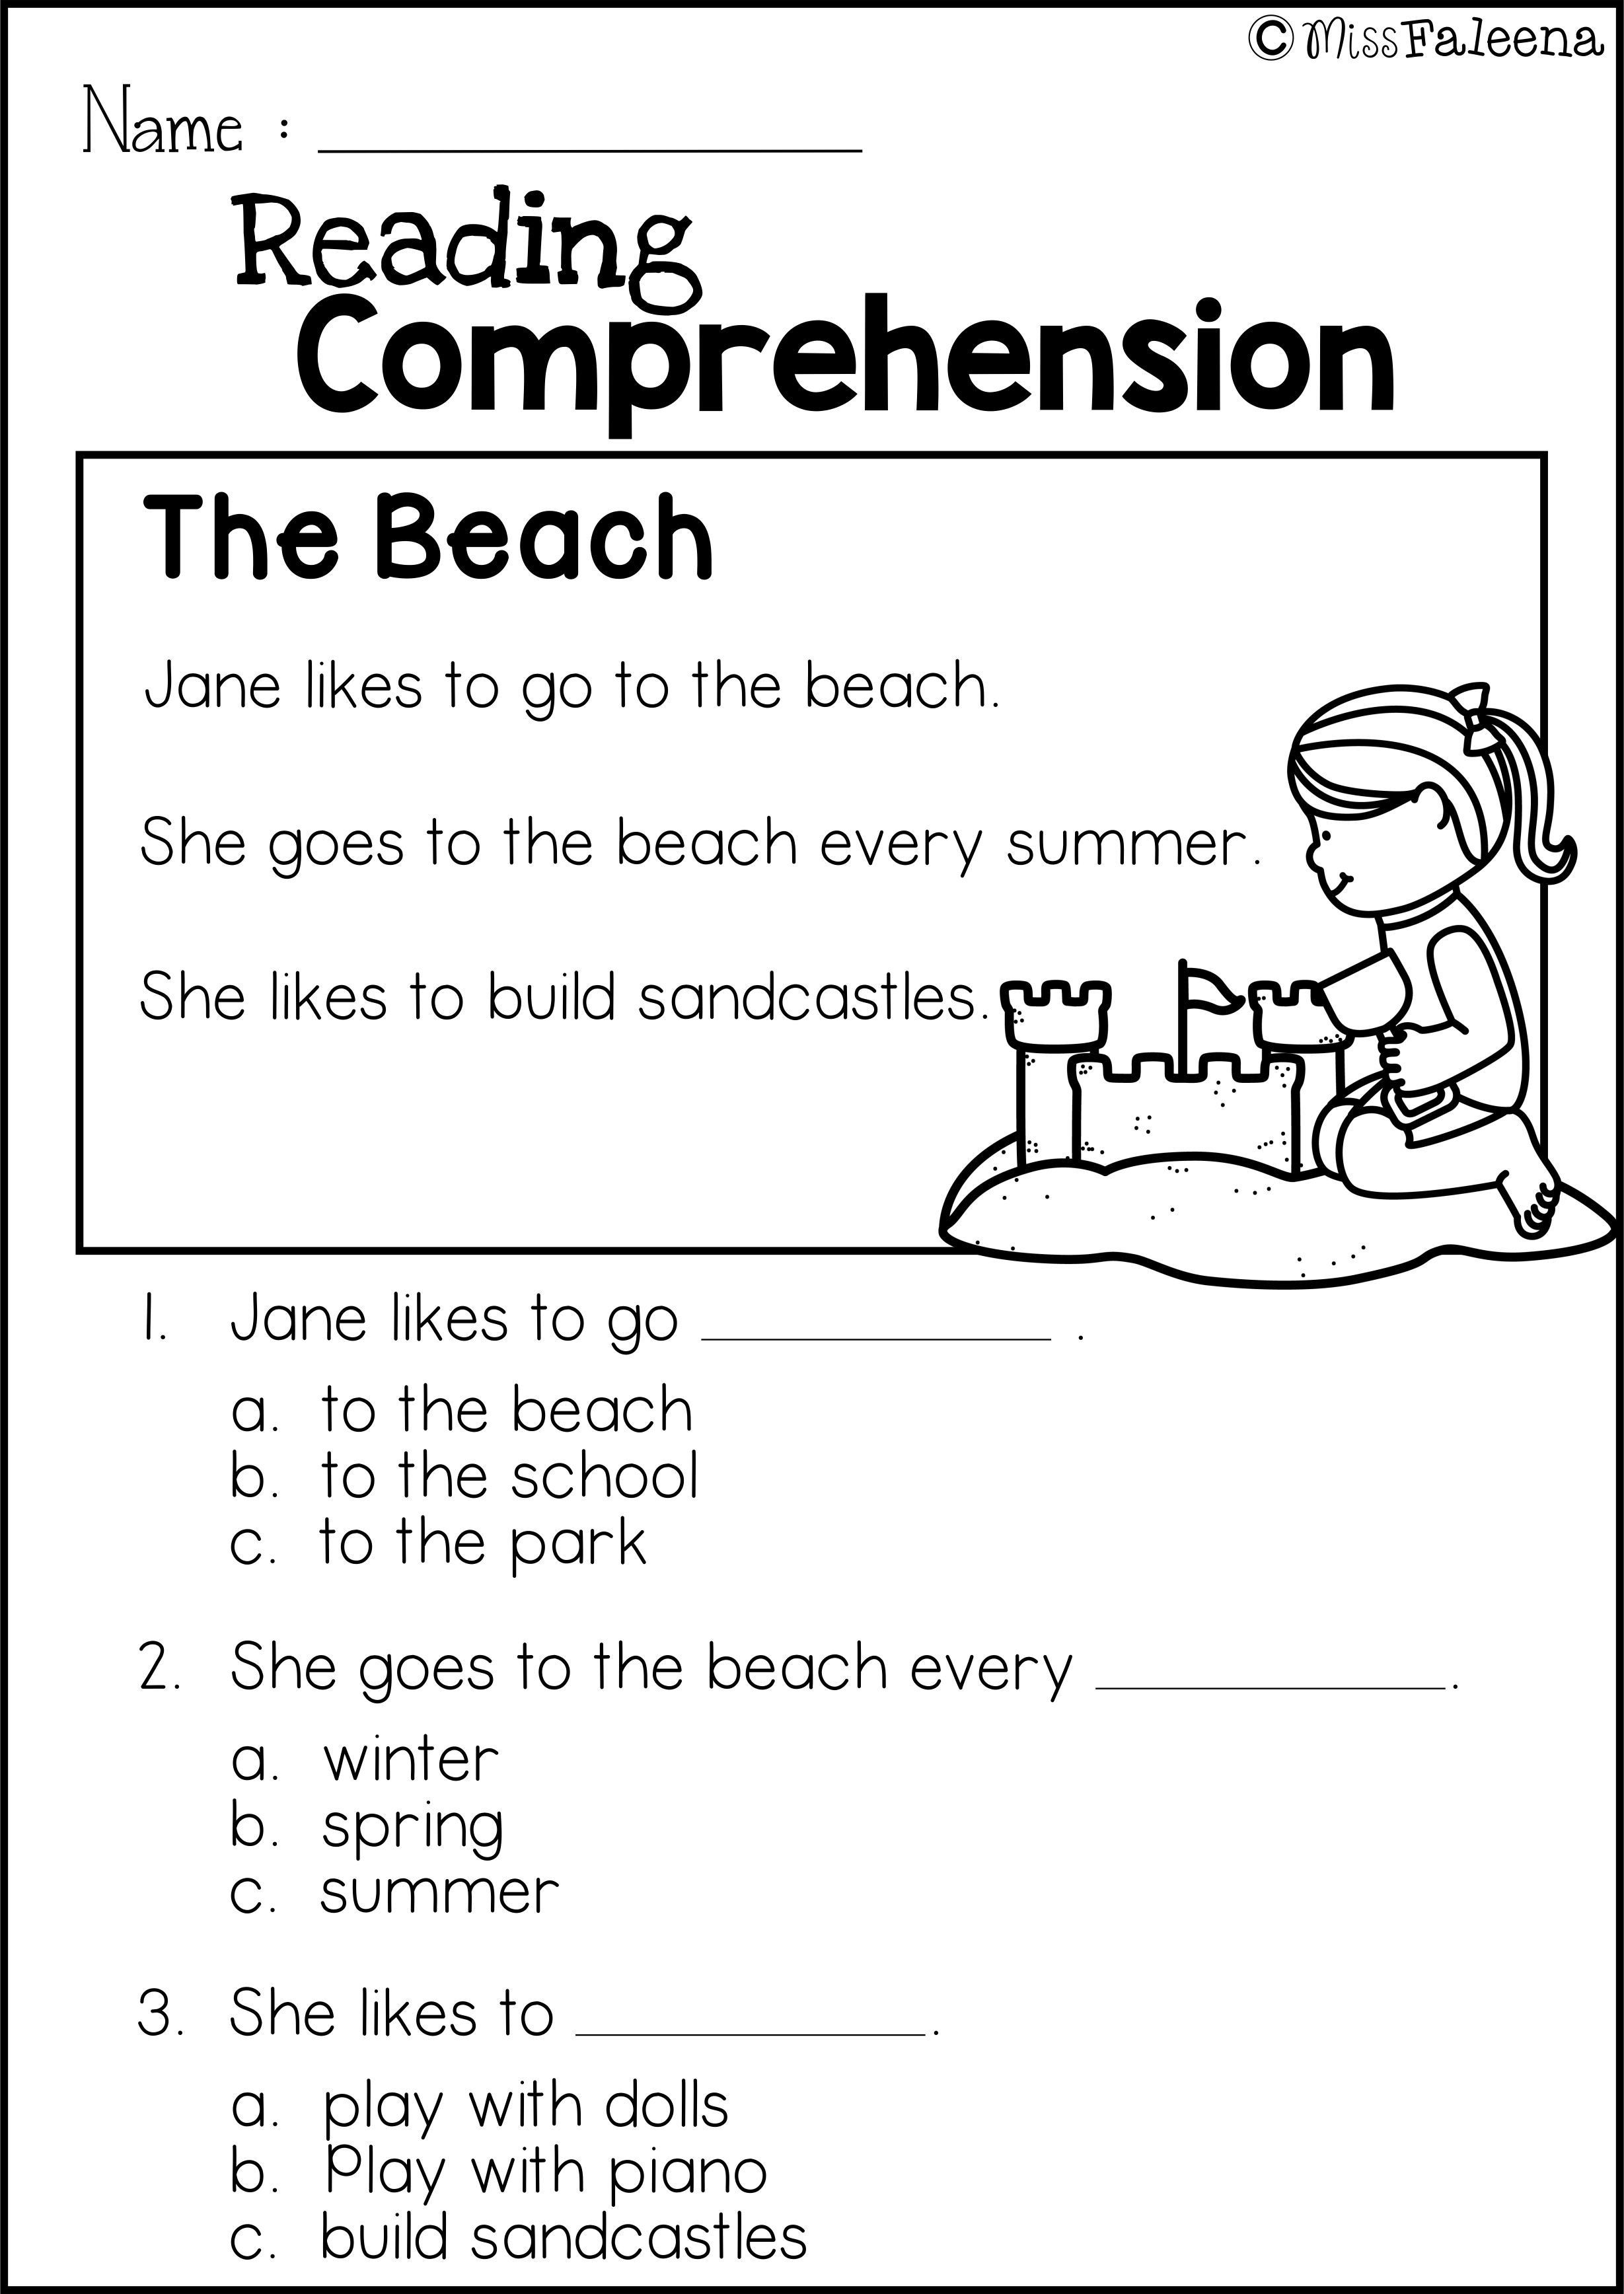 Kindergarten Worksheets Reading Comprehension Free Reading Prehension Practice with Images